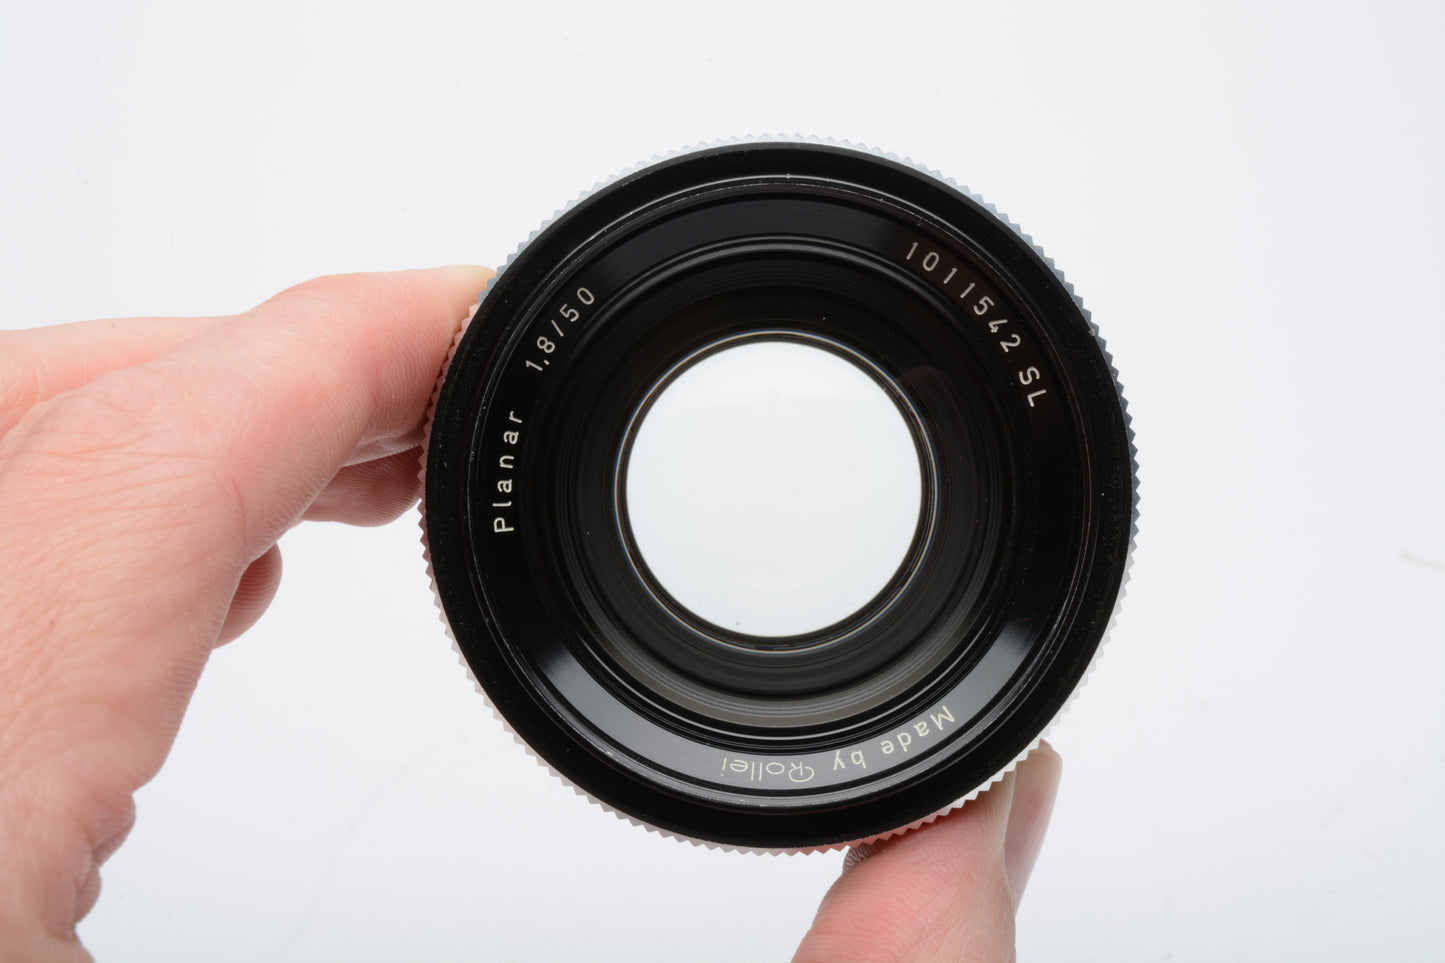 Rollei Planar 50mm F1.8 Prime Lens for Rollei QBM SL35 Series Cameras, Nice!